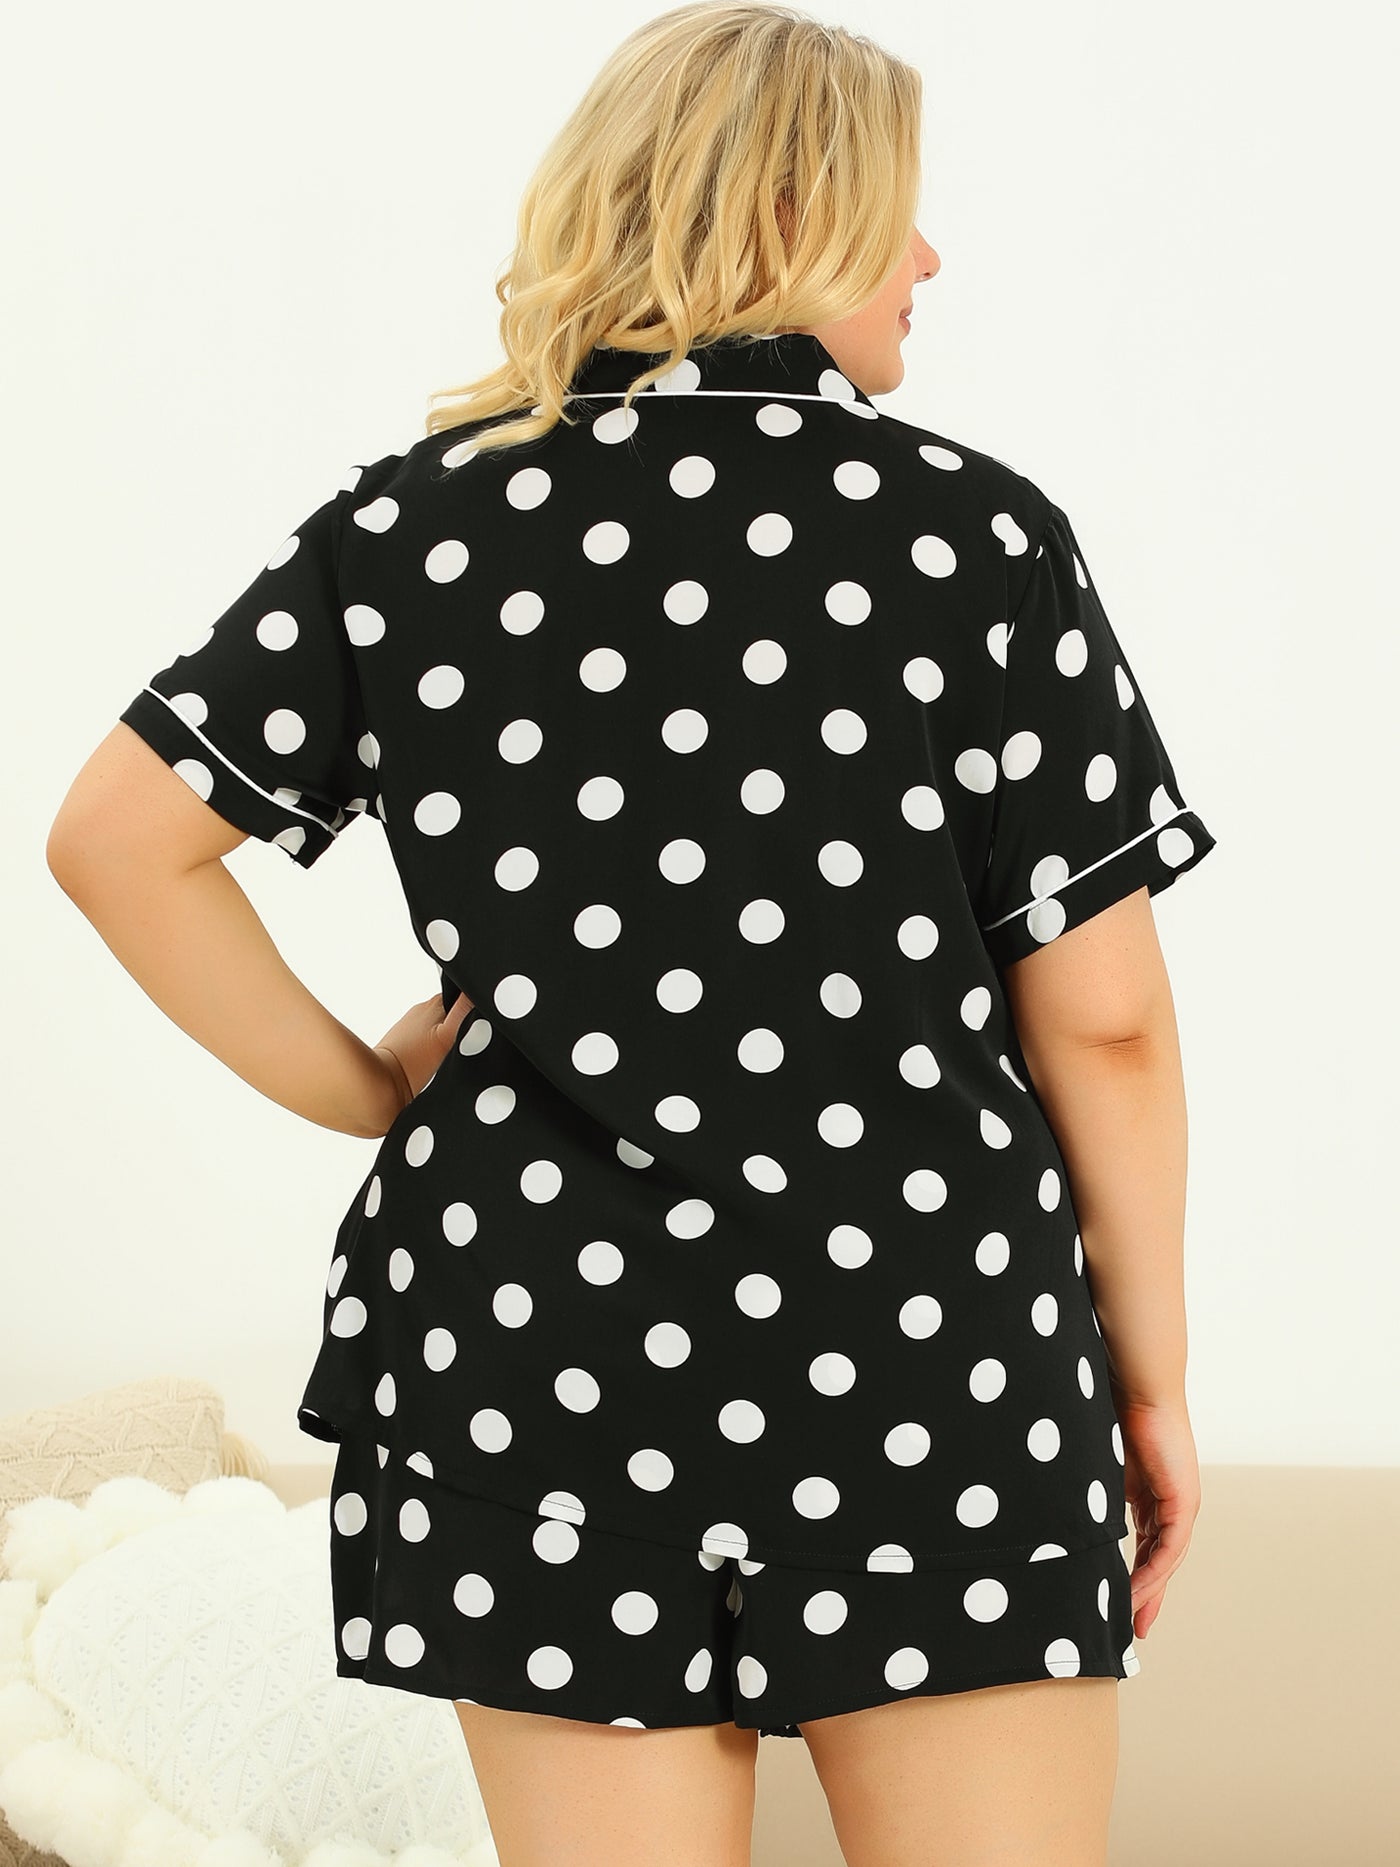 Bublédon Women's Plus Size Pajama Set Short Sleeve Bottoms Polka Dots Shirt